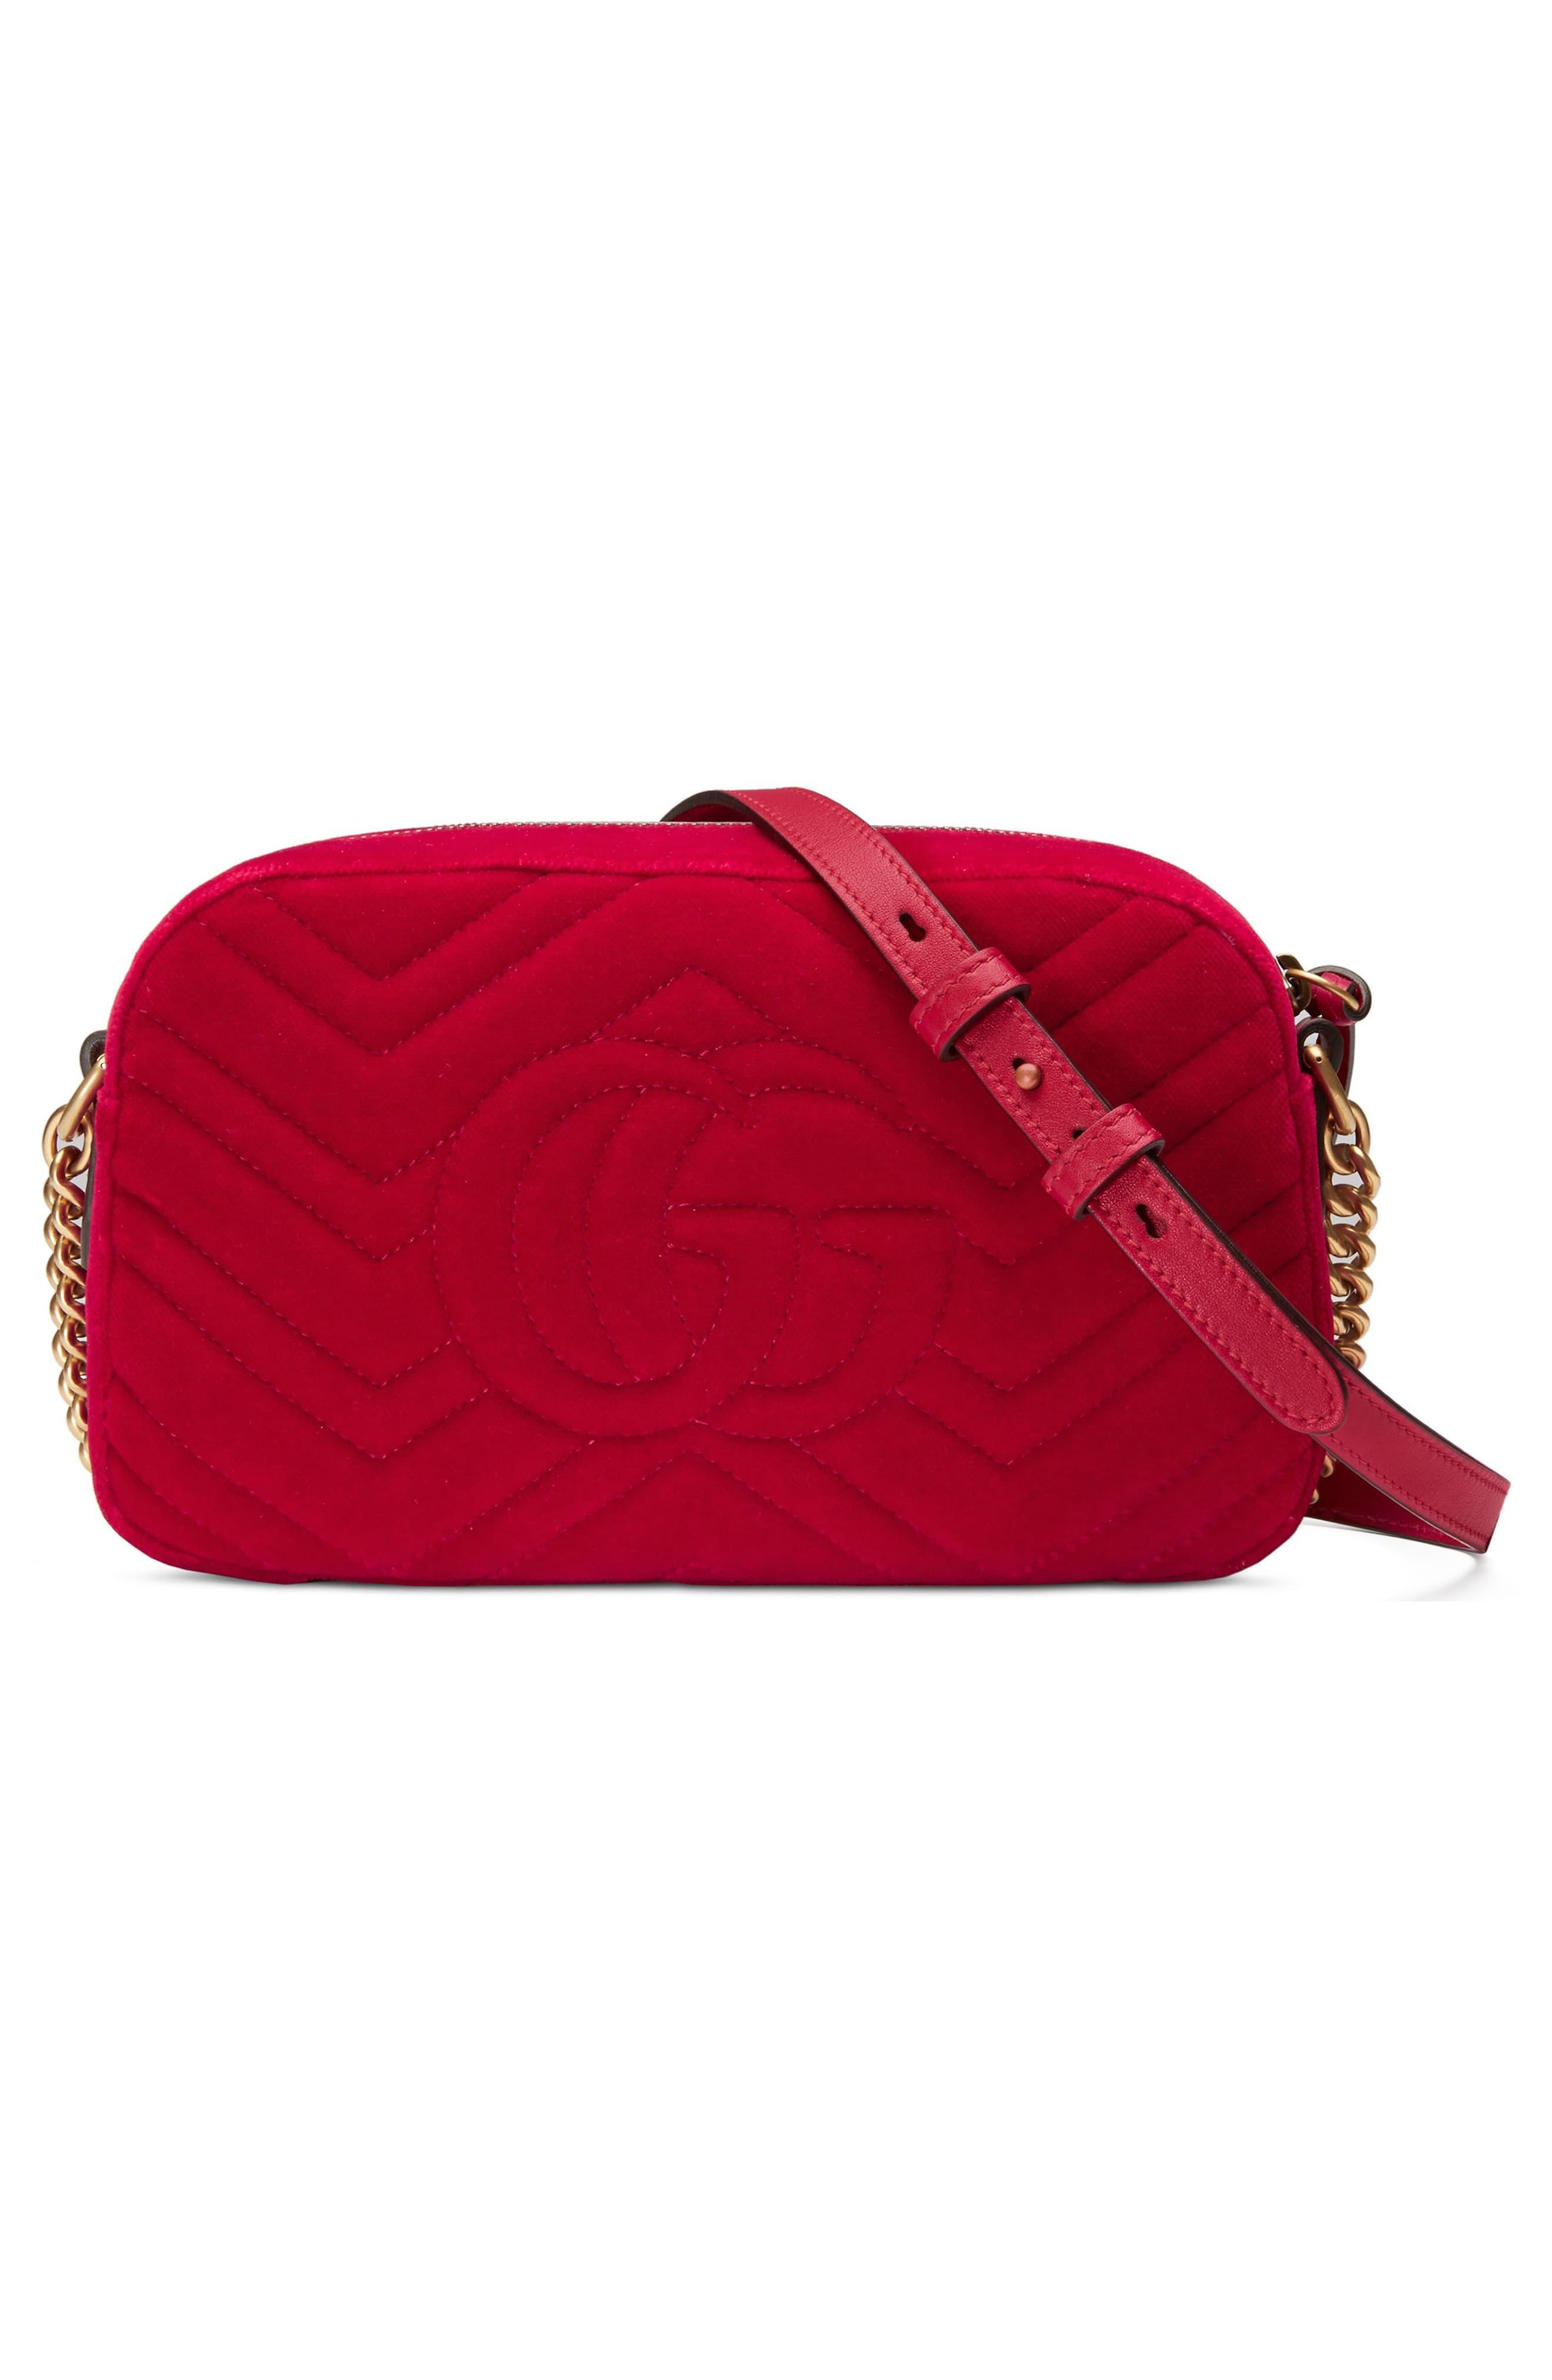 Gucci Small Gg Marmont 2.0 Matelassé Velvet Shoulder Bag in Red - Lyst